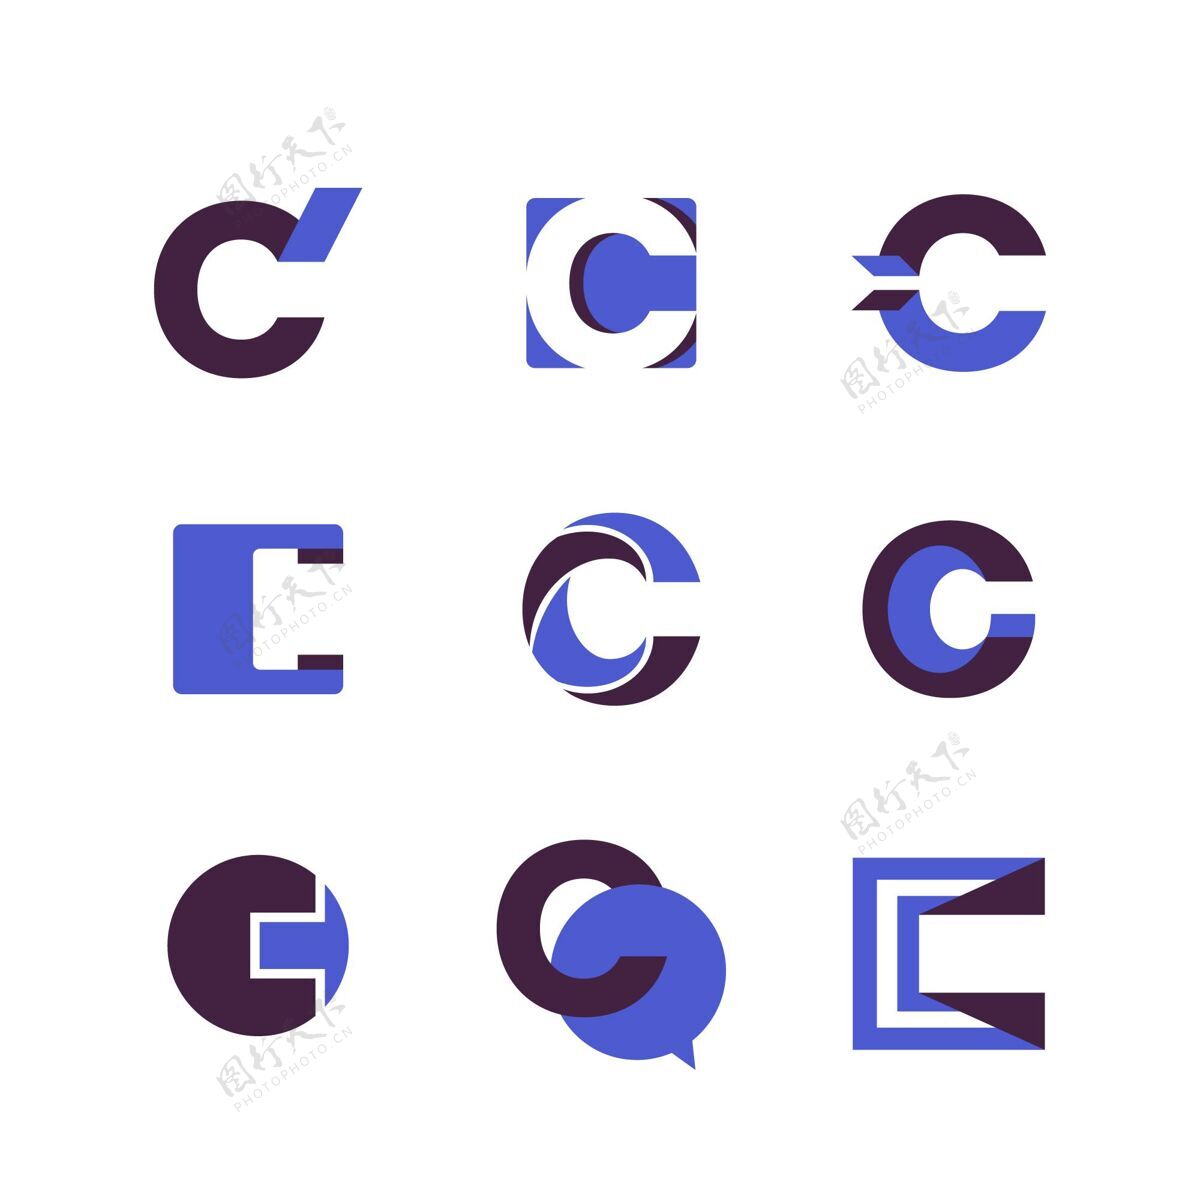 Corporate平面设计c标志模板集合企业标识BusinessCompany